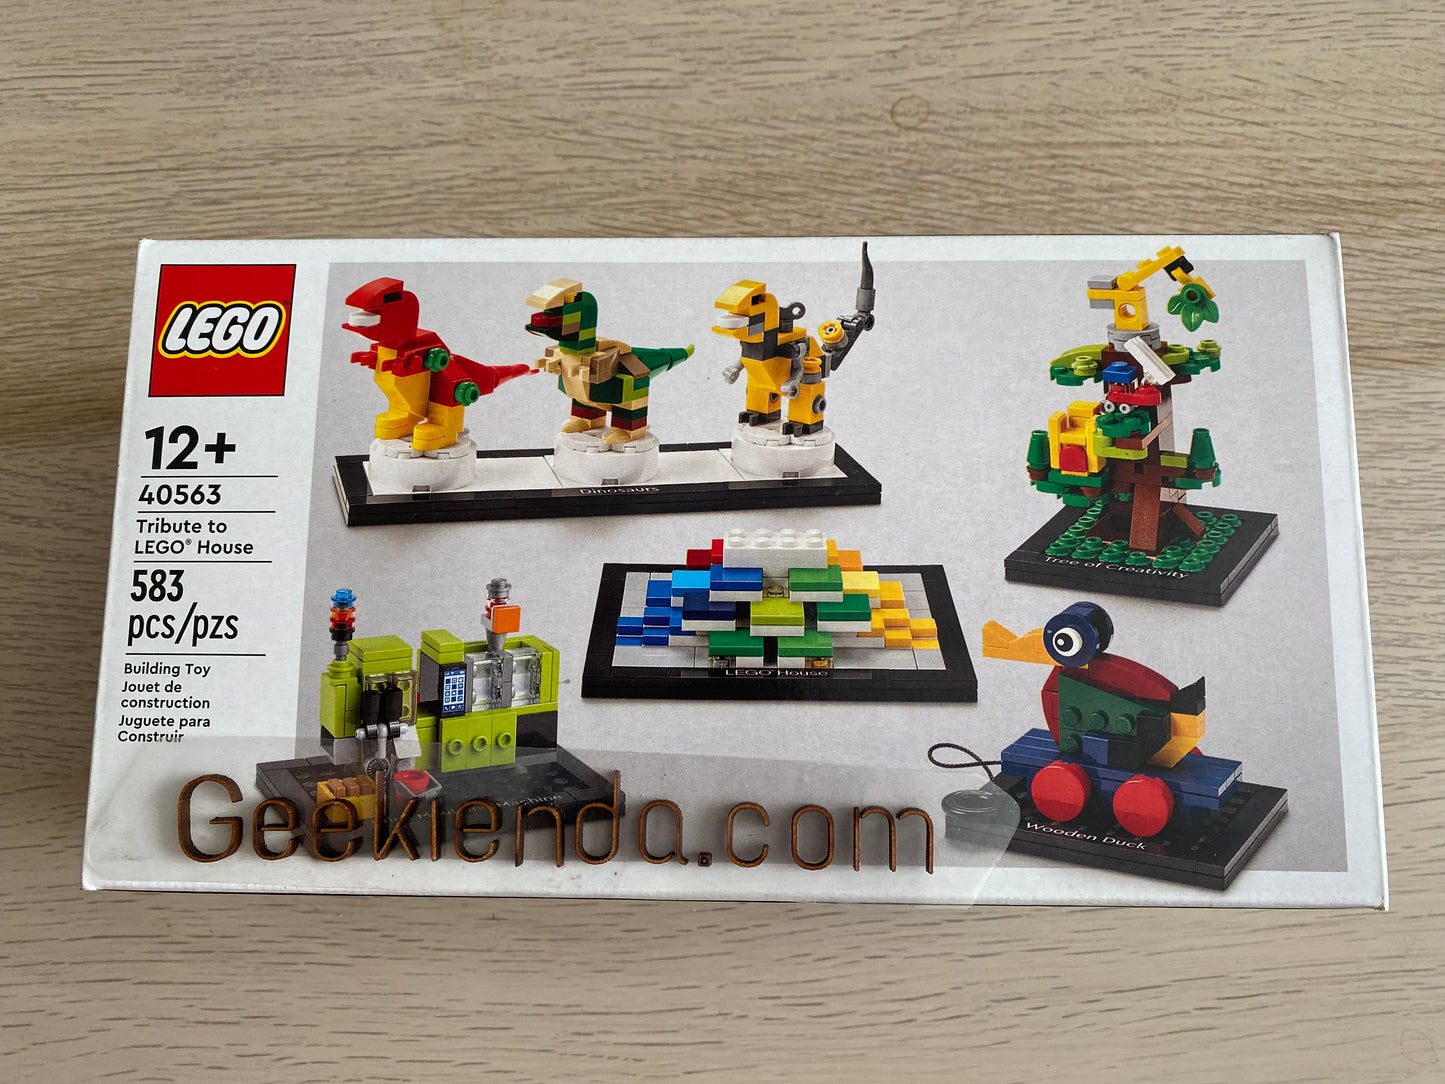 . Geekienda - LEGO SET 40563 tribute to lego house (tributo a la casa de lego)  - LEGO